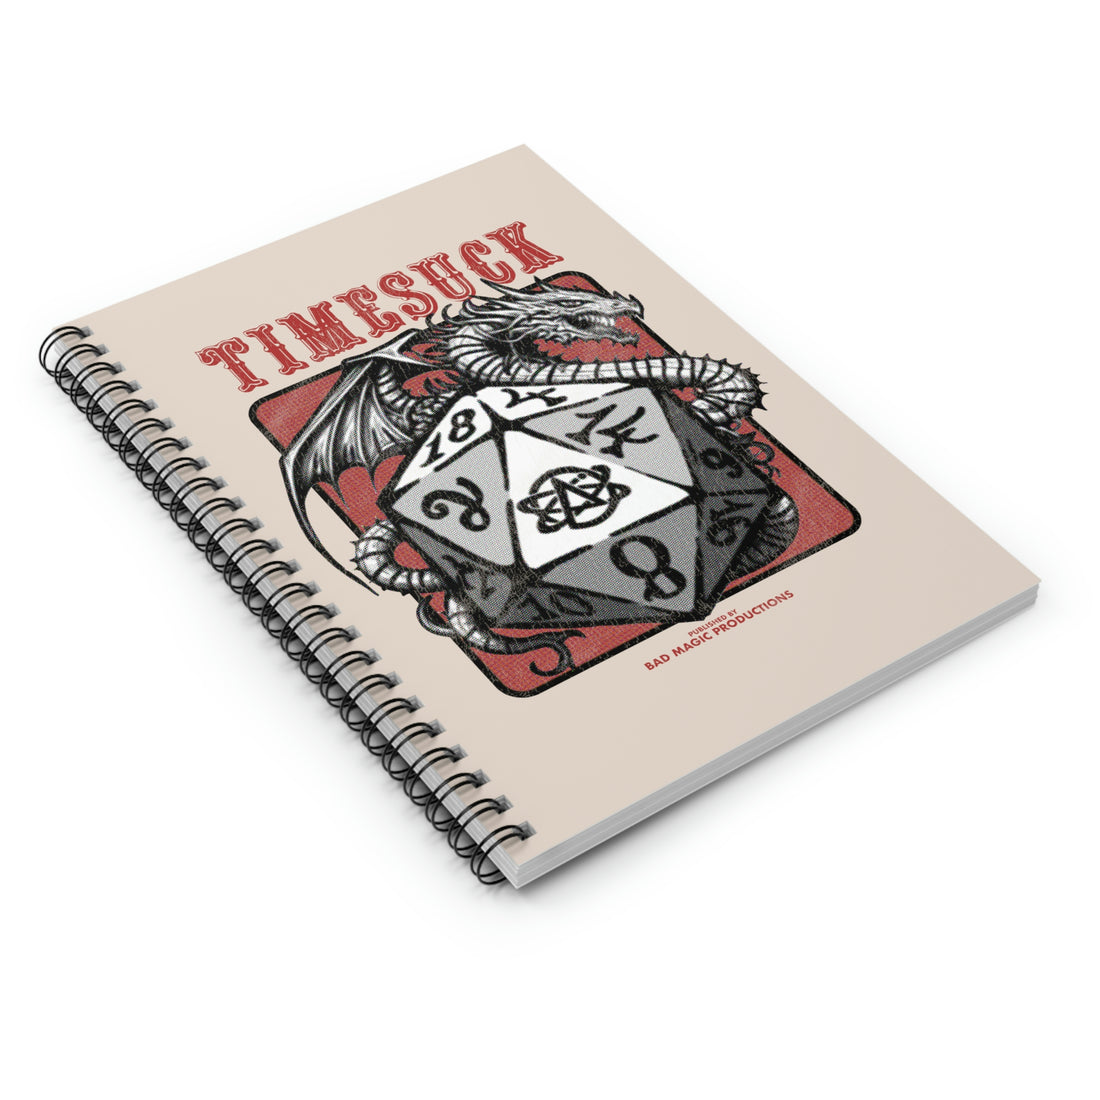 Timesuck & Dragons Notebook